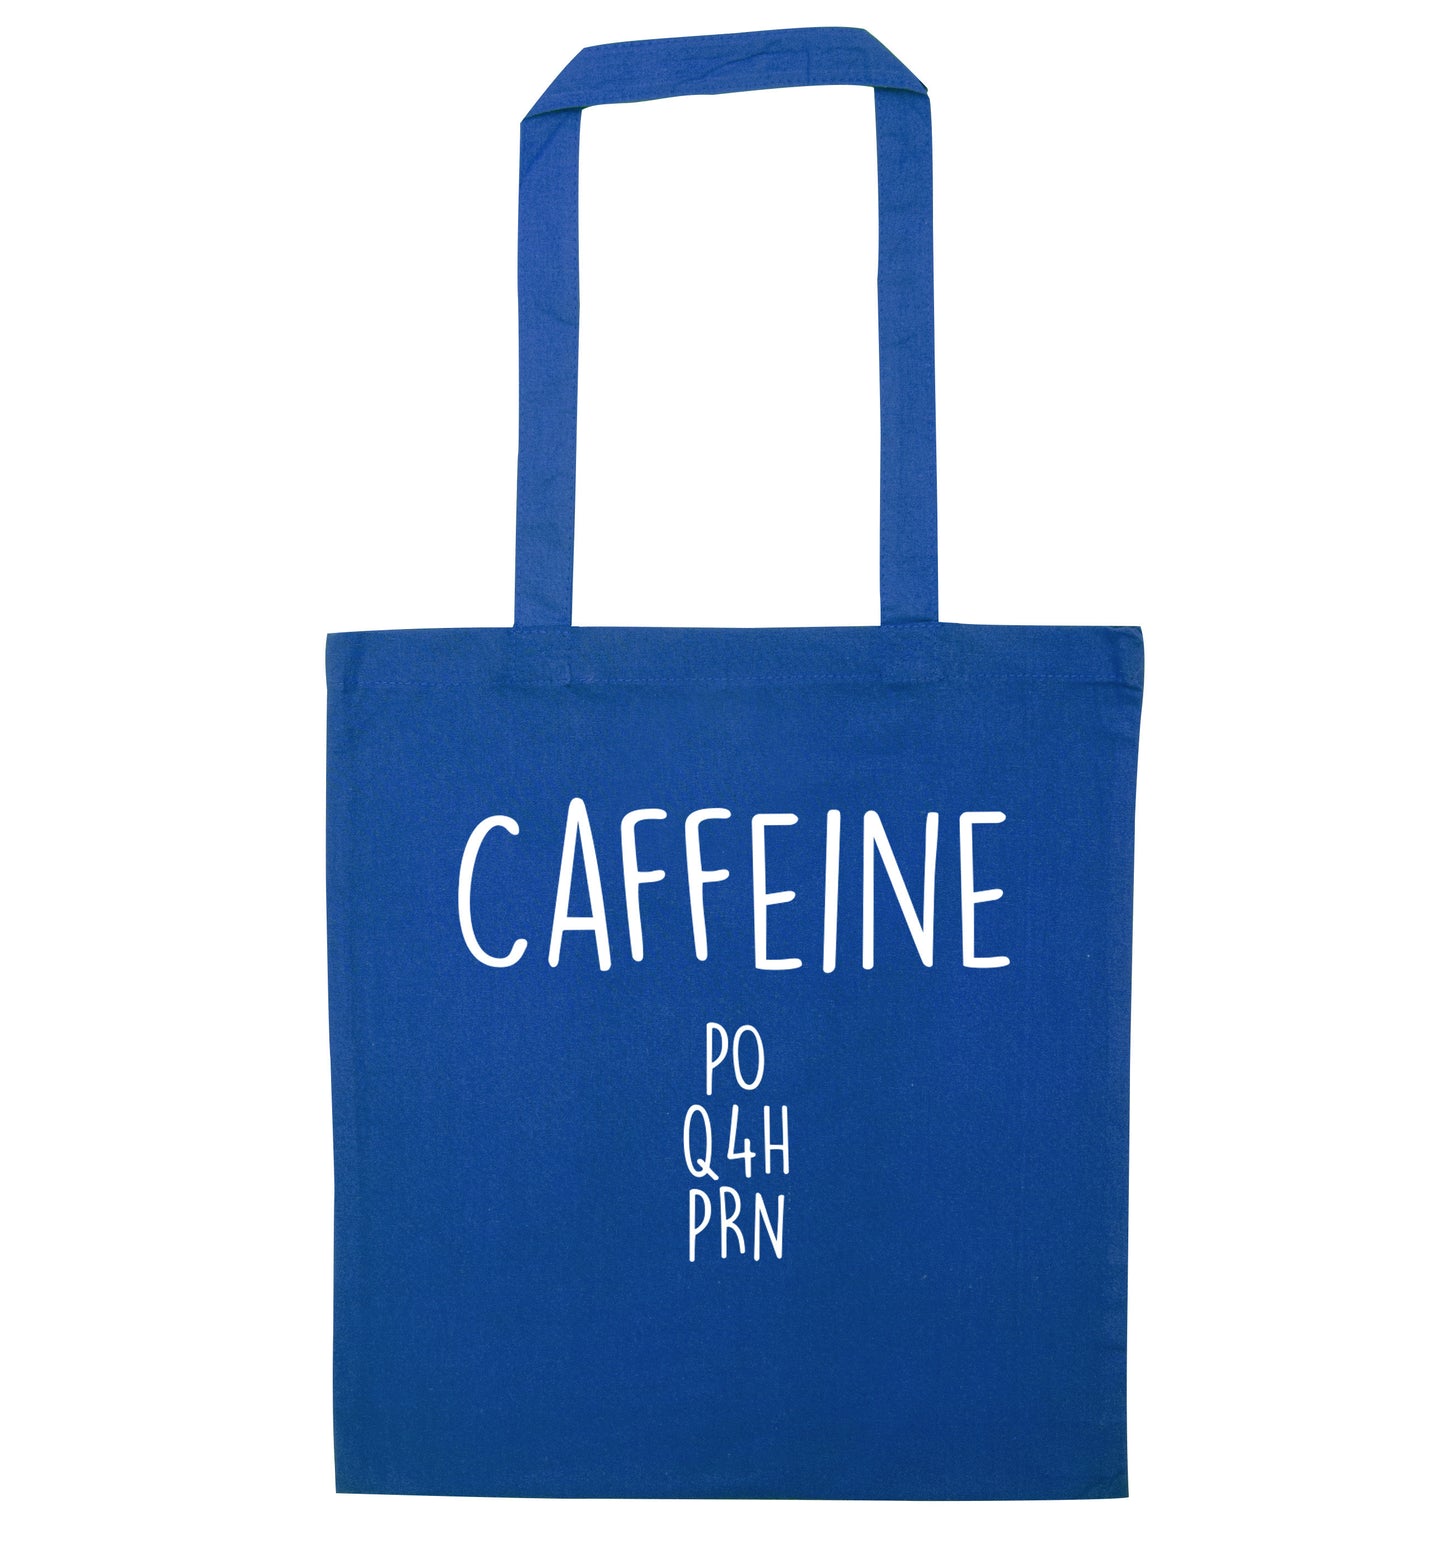 Caffeine PO Q4H PRN blue tote bag